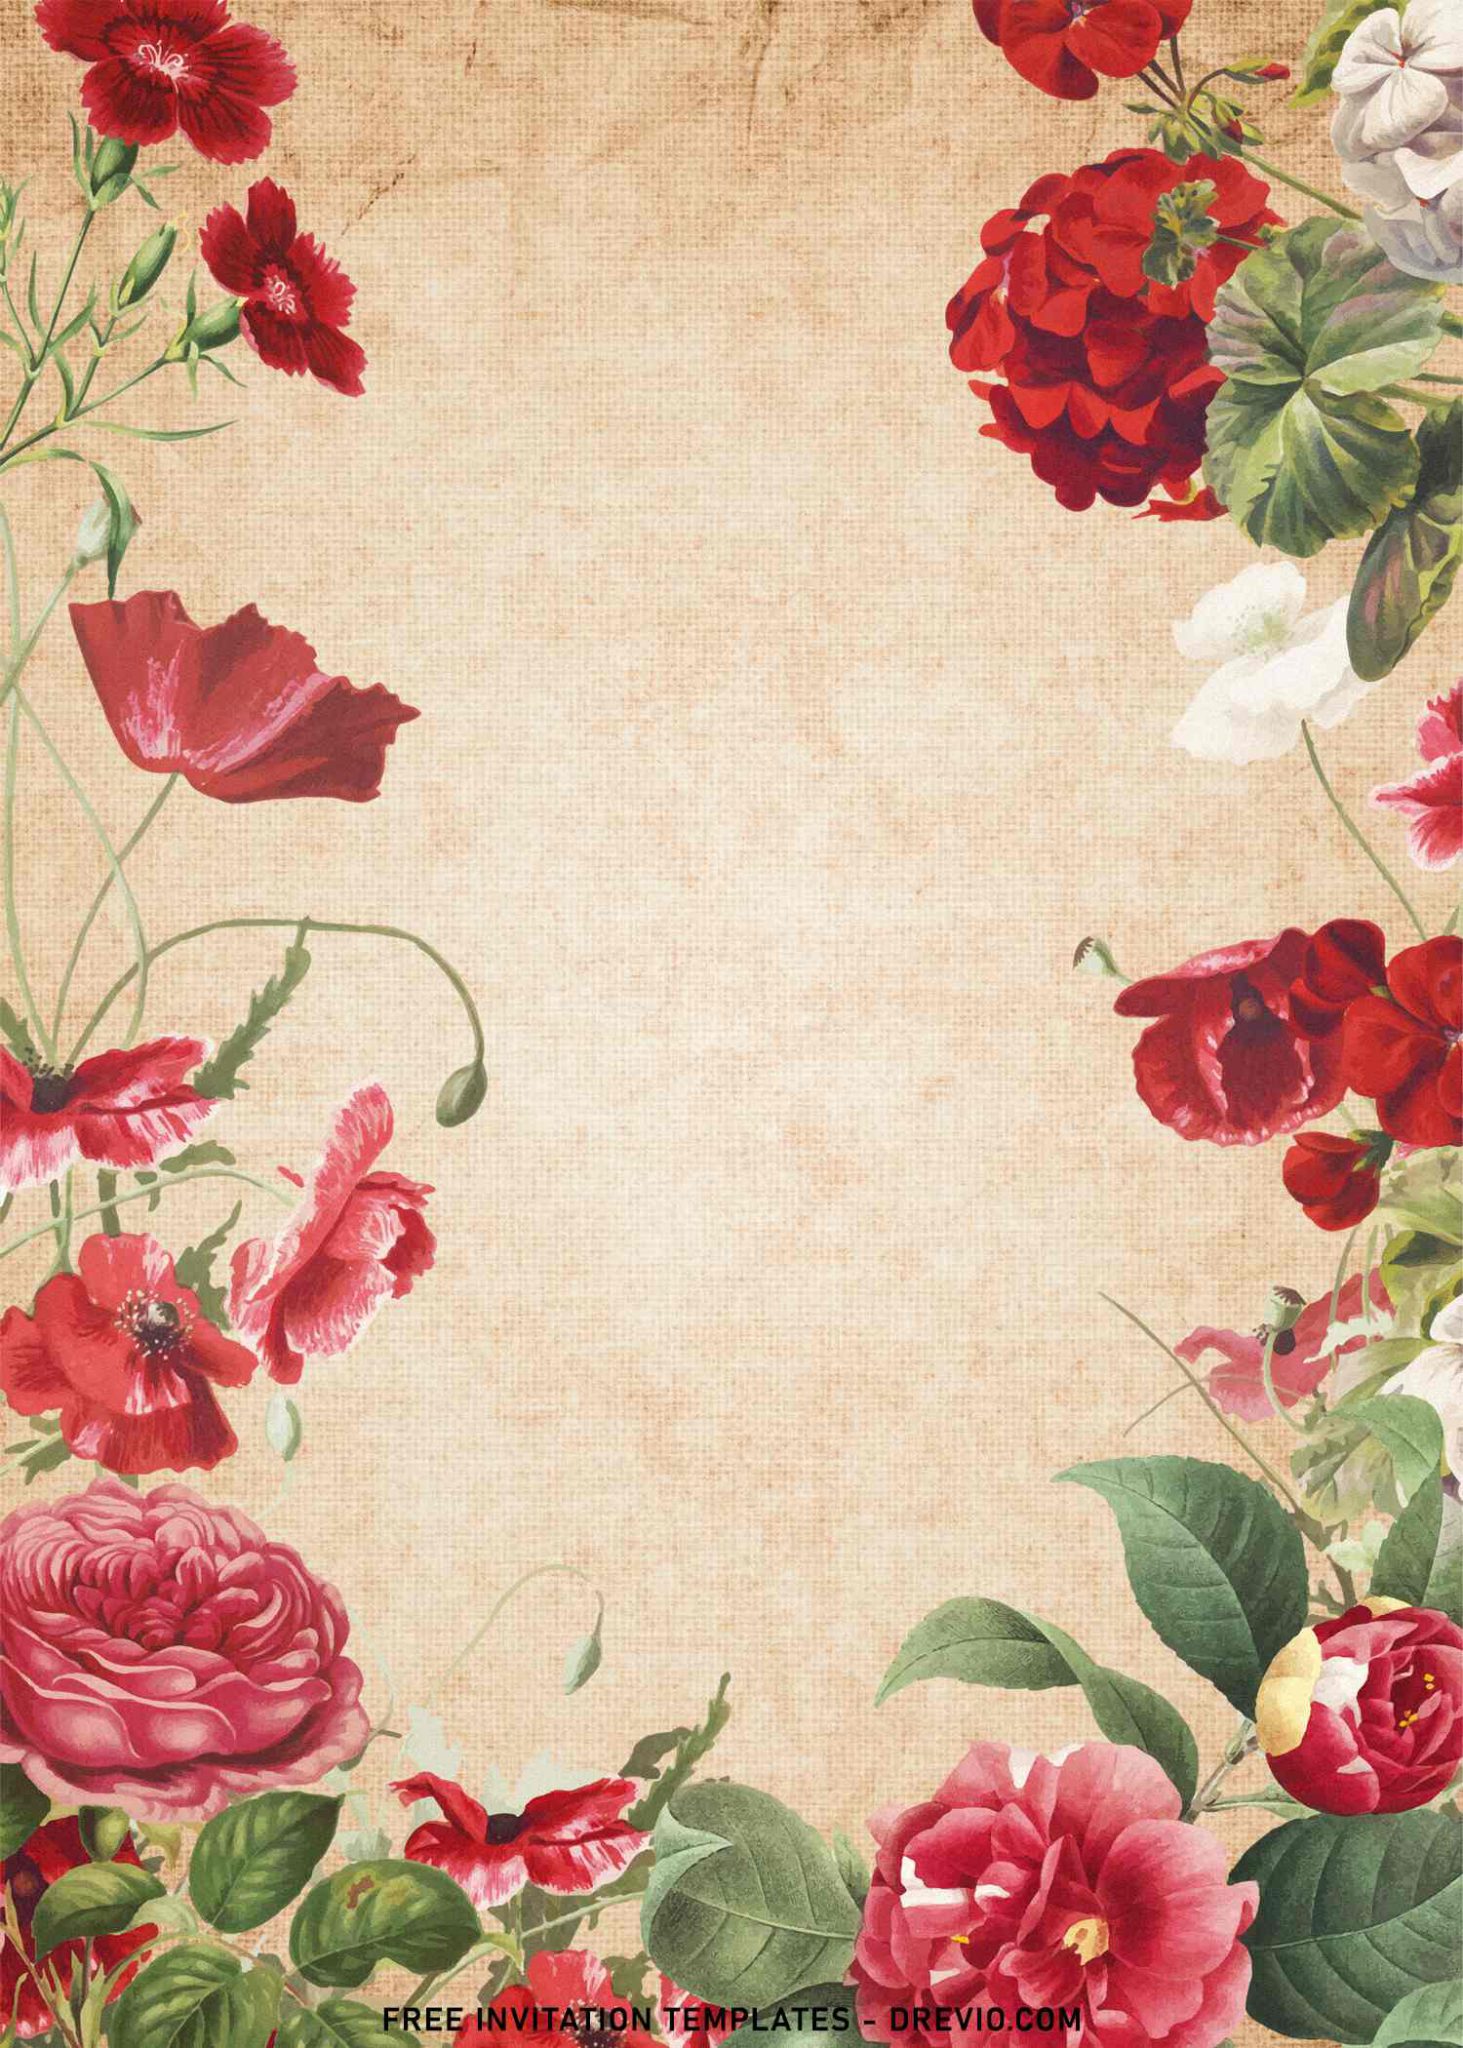 7-rustic-vintage-floral-birthday-invitation-templates-download